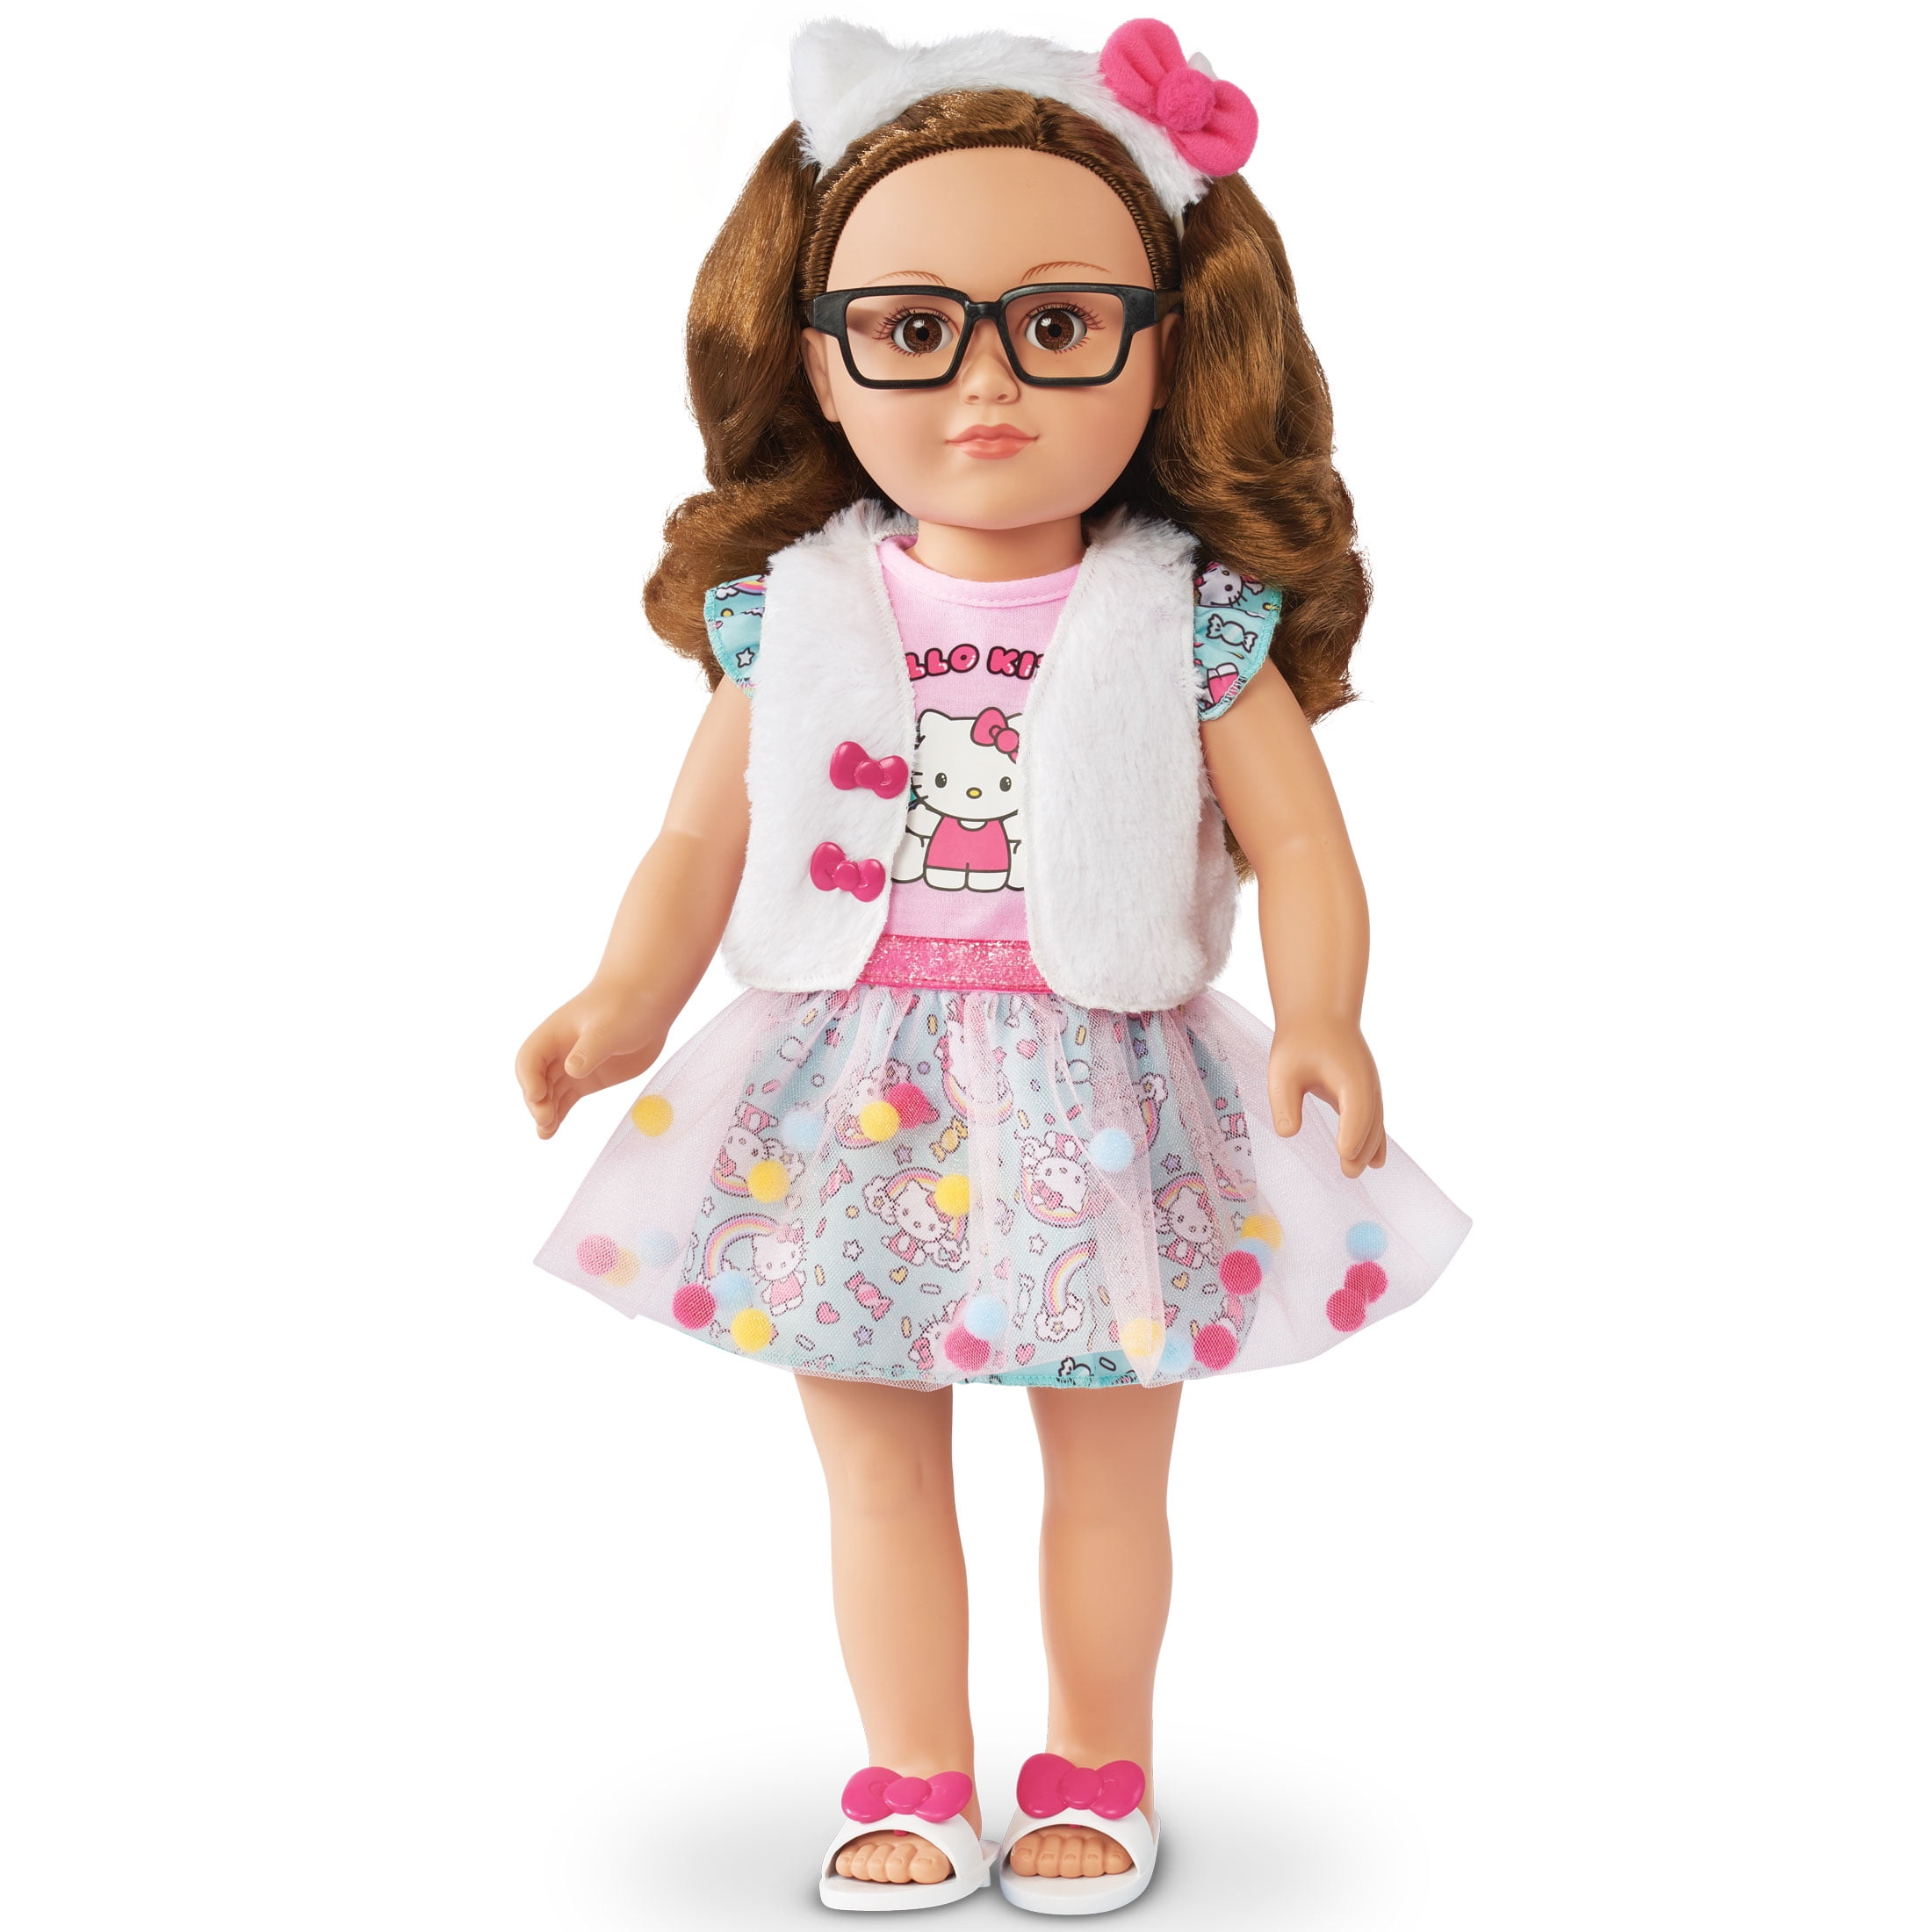 Barbie doll dress shop. New dress for Barbie doll. DIY dolls shop | Shop  dress up, Doll dress, Barbie dolls